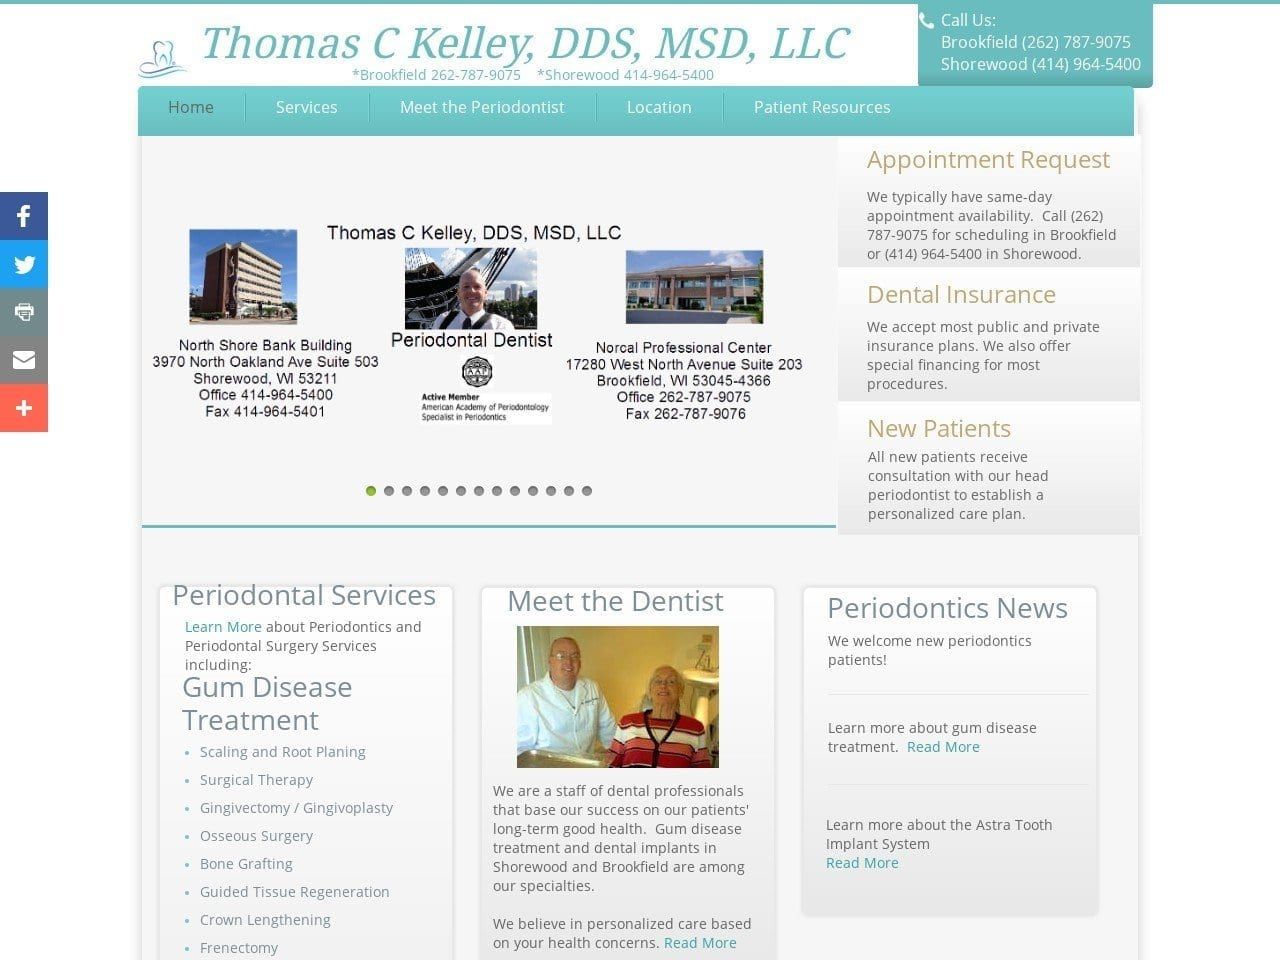 Thomas C. Kelley D.D.S. M.S.D Website Screenshot from kelleyperio.com